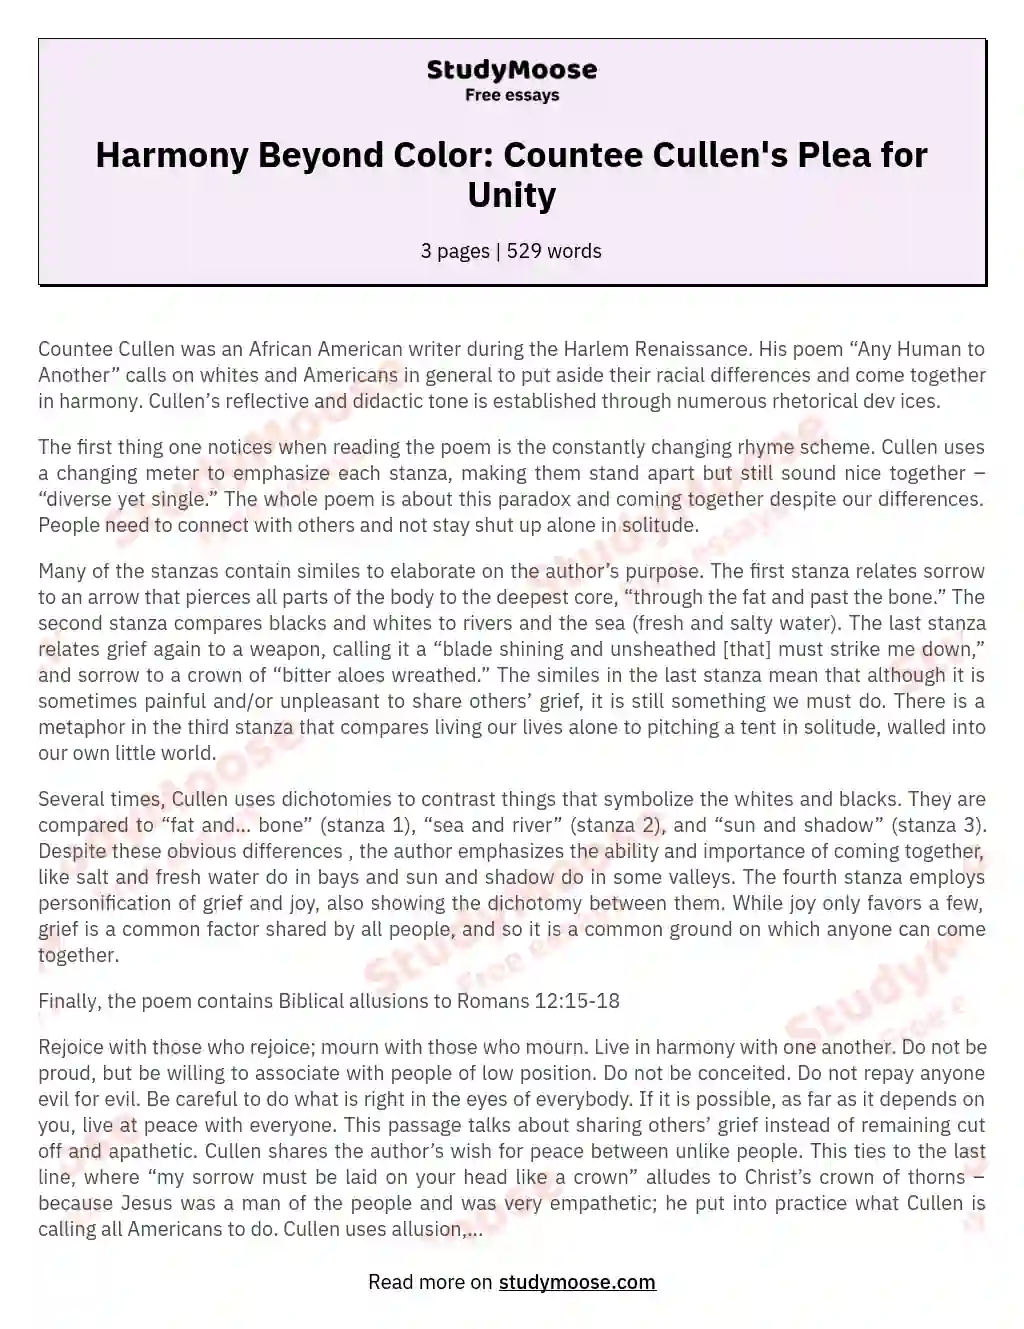 Harmony Beyond Color: Countee Cullen's Plea for Unity essay